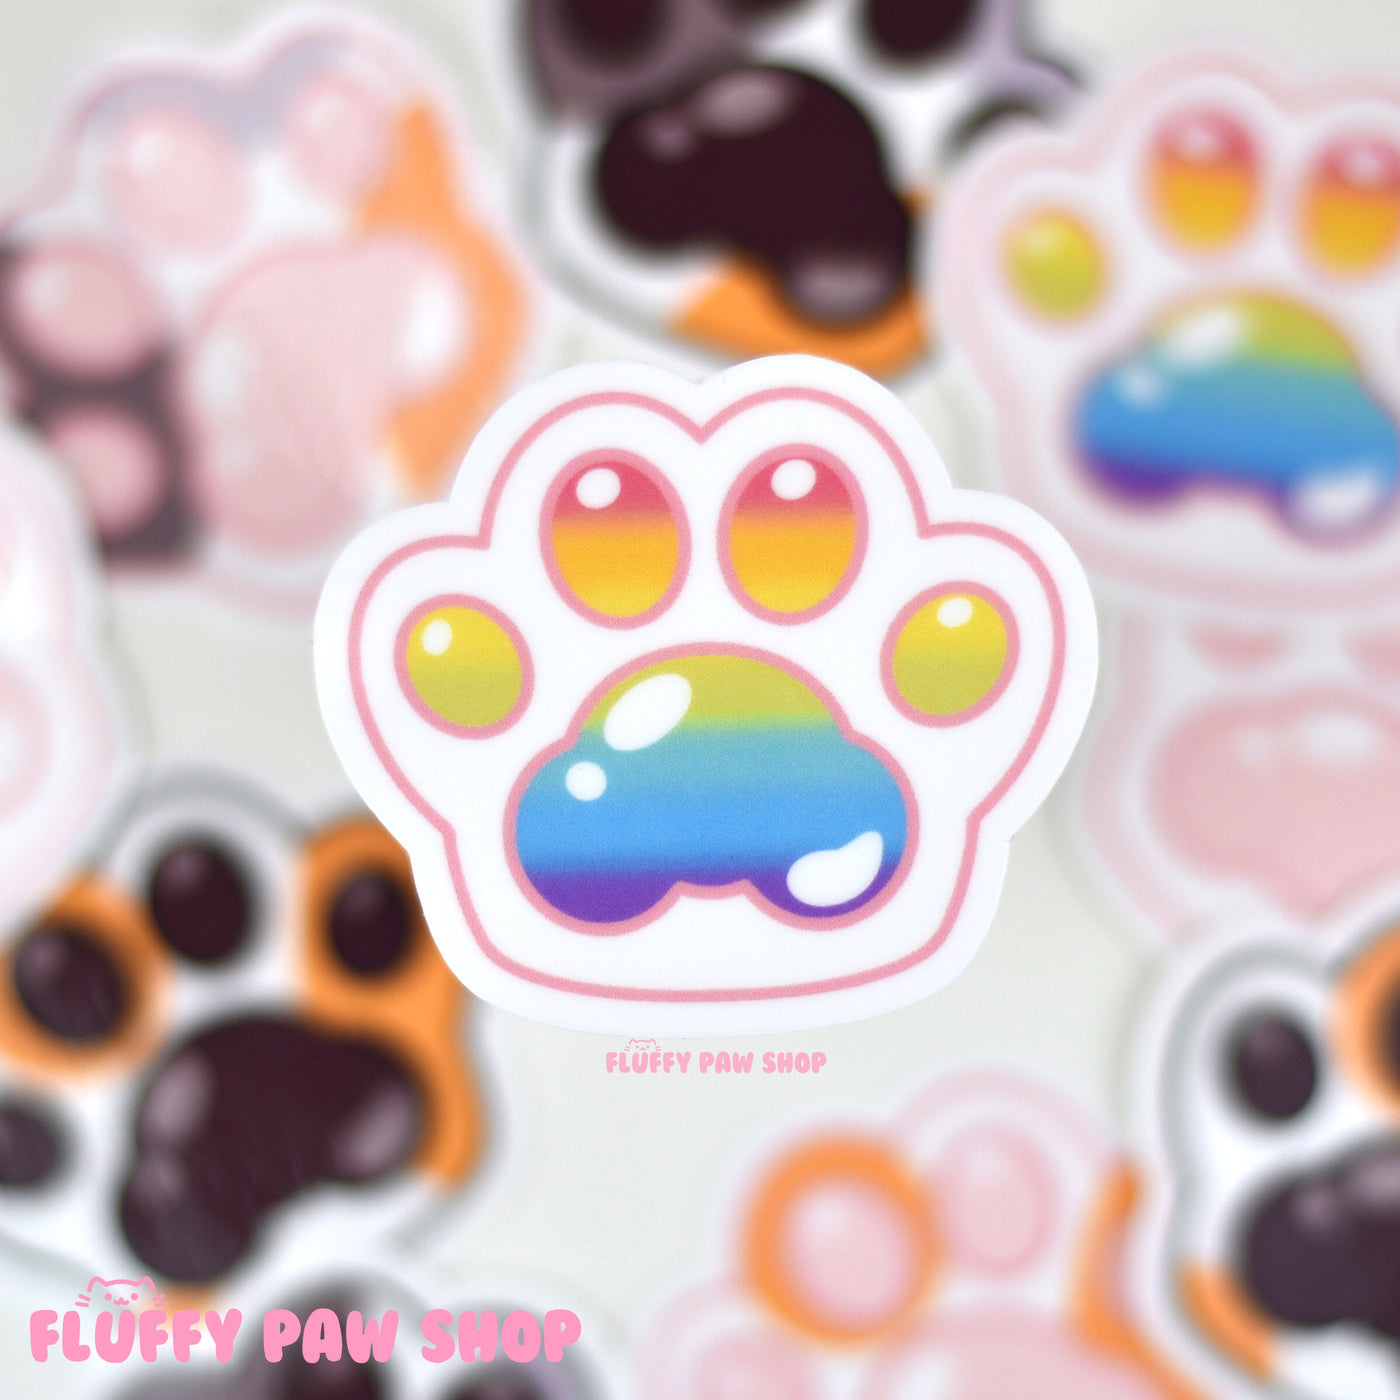 Rainbow Paw Vinyl Sticker - Fluffy Paw Shop - Petplay BDSM DDLG Kitten Play Tail Cosplay Furry